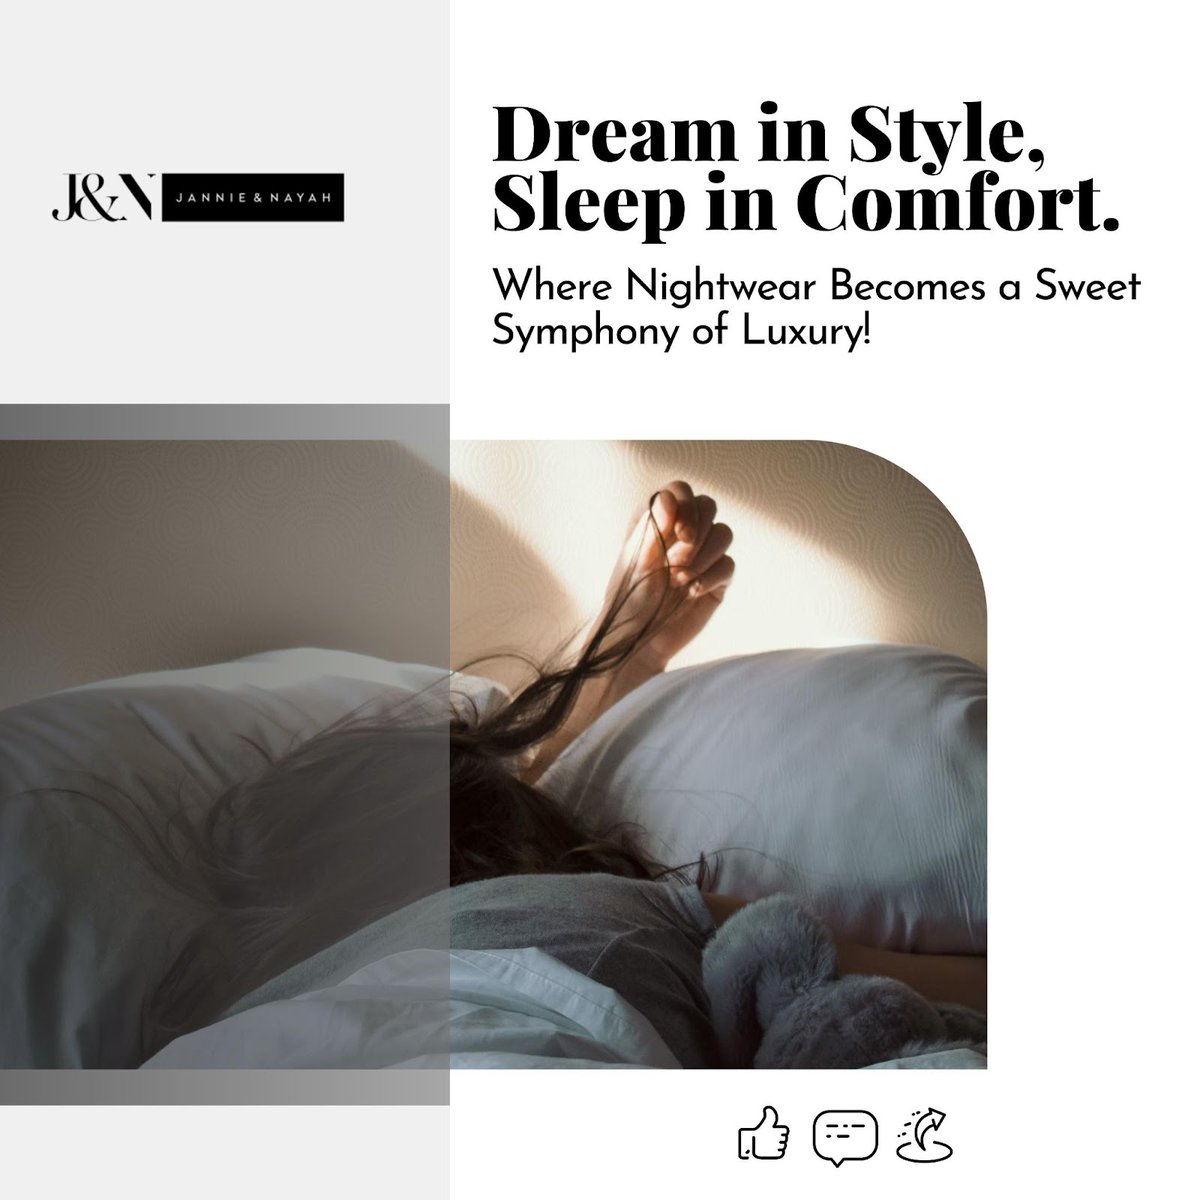 🌙✨Dream in Style, Sleep in Comfort: Where Nightwear Becomes a Sweet Symphony of Luxury!
----
Shop here: jannienayah.com  
.
#NightwearForWomen #WomensFashion #SleepwearGoals #ElegantLoungewear #FrontDesign